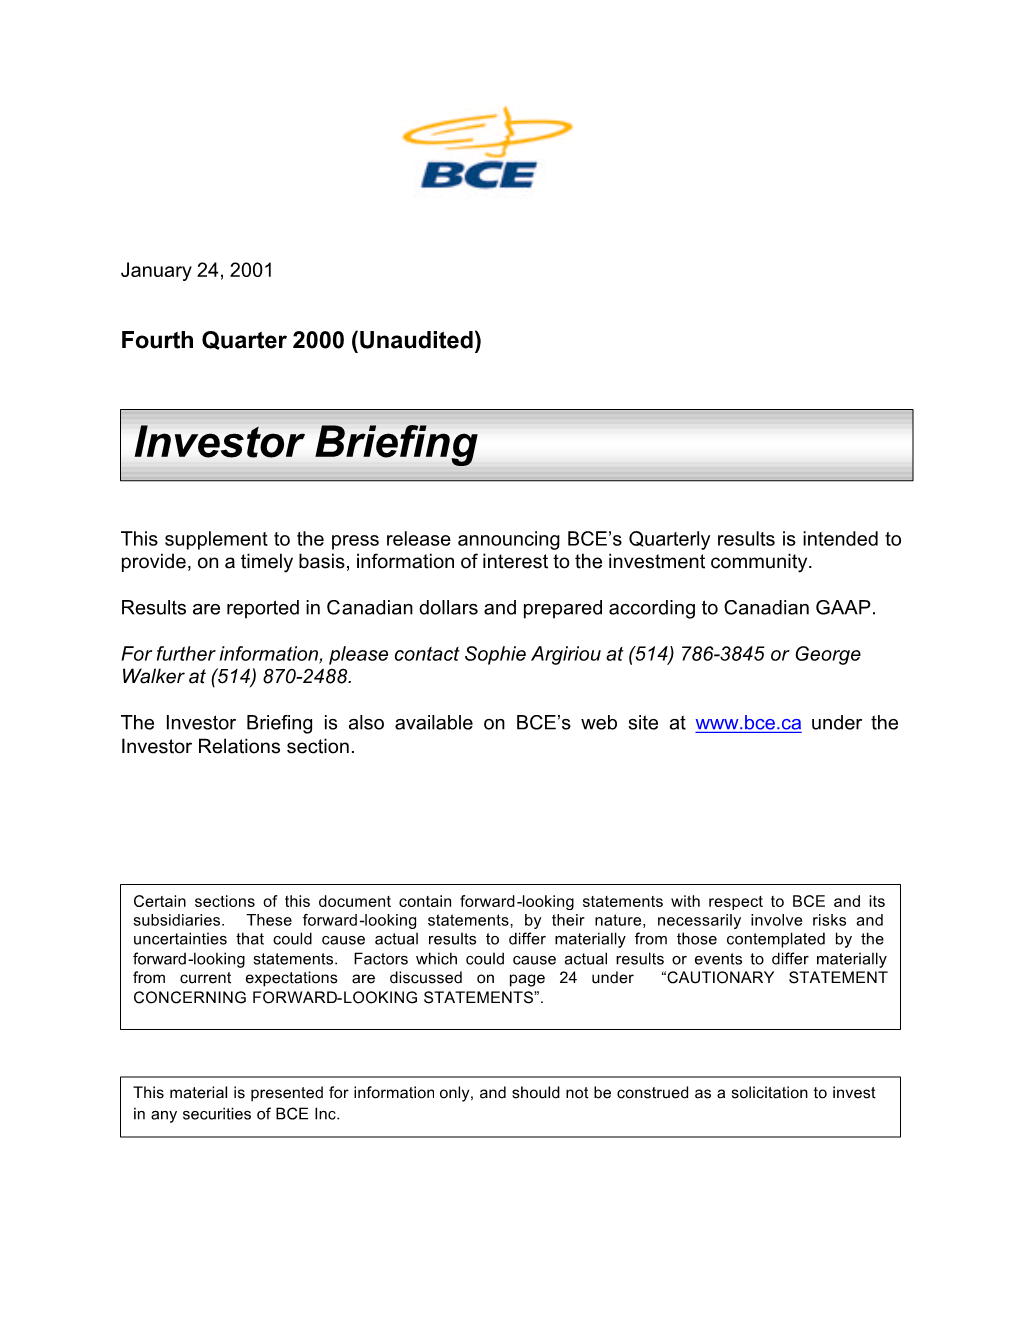 Investor Briefing